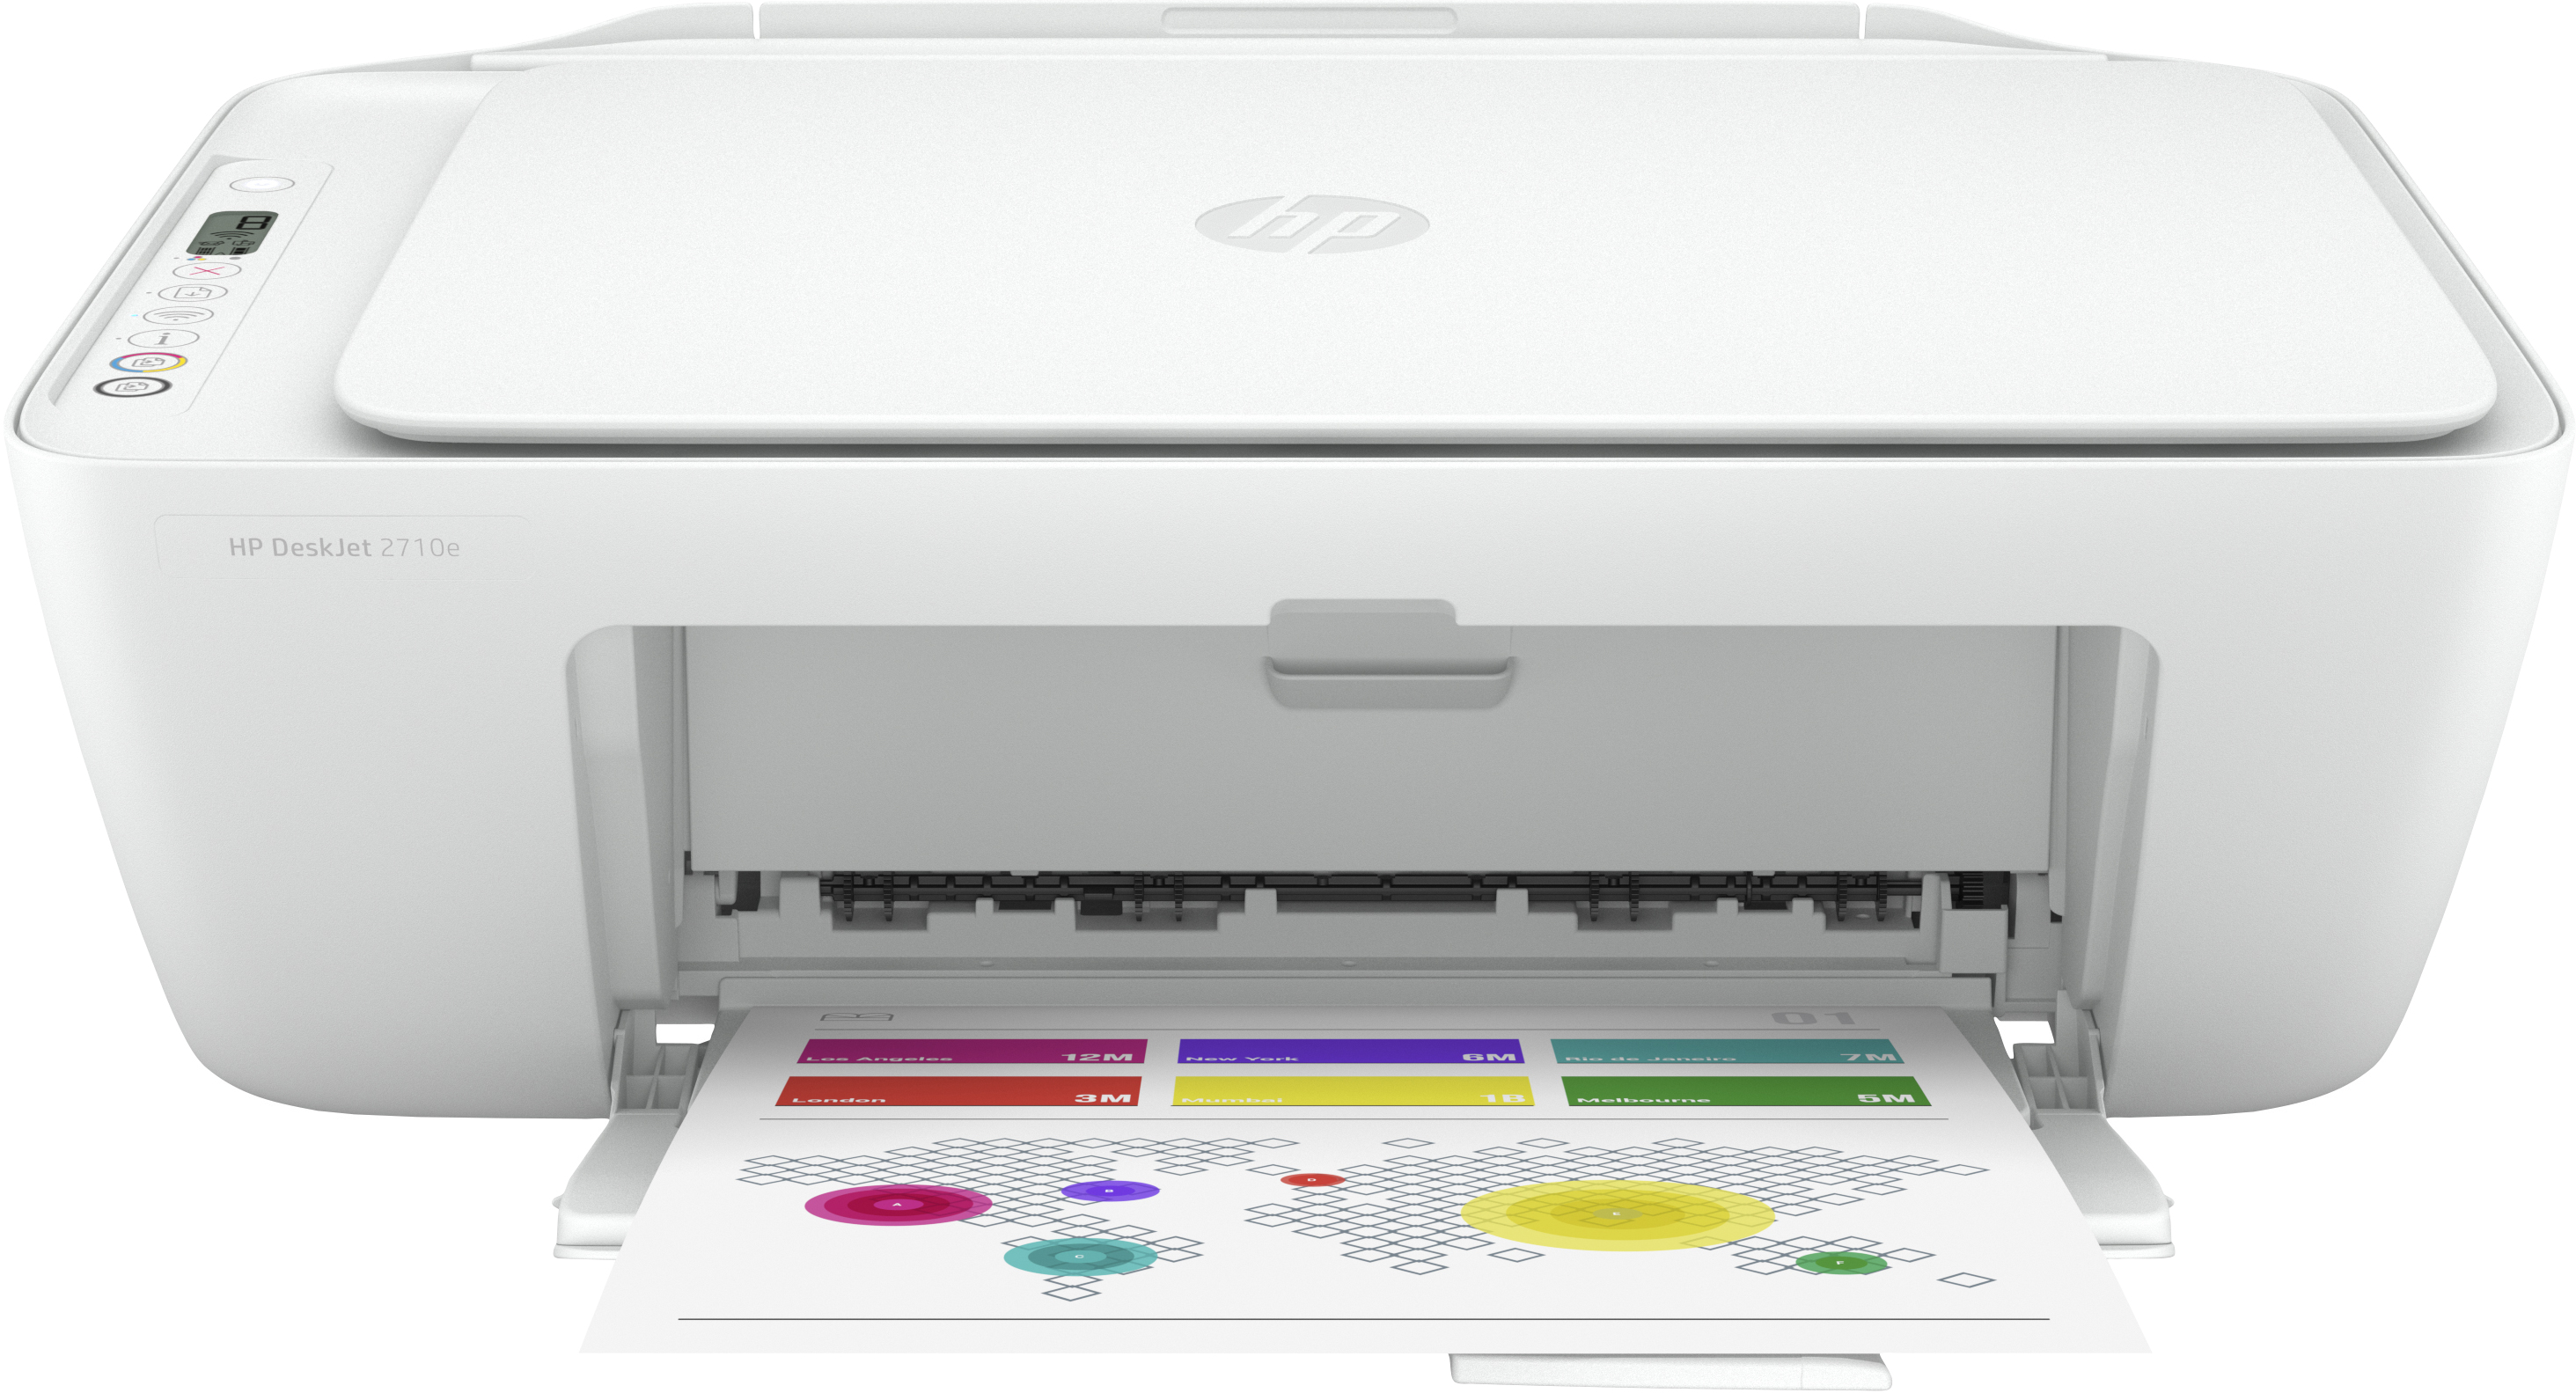 Image of HP DeskJet Stampante multifunzione HP 2710e, Colore, Stampante per Casa, Stampa, copia, scansione, wireless; HP+; idonea a HP Instant Ink; stampa da smartphone o tablet